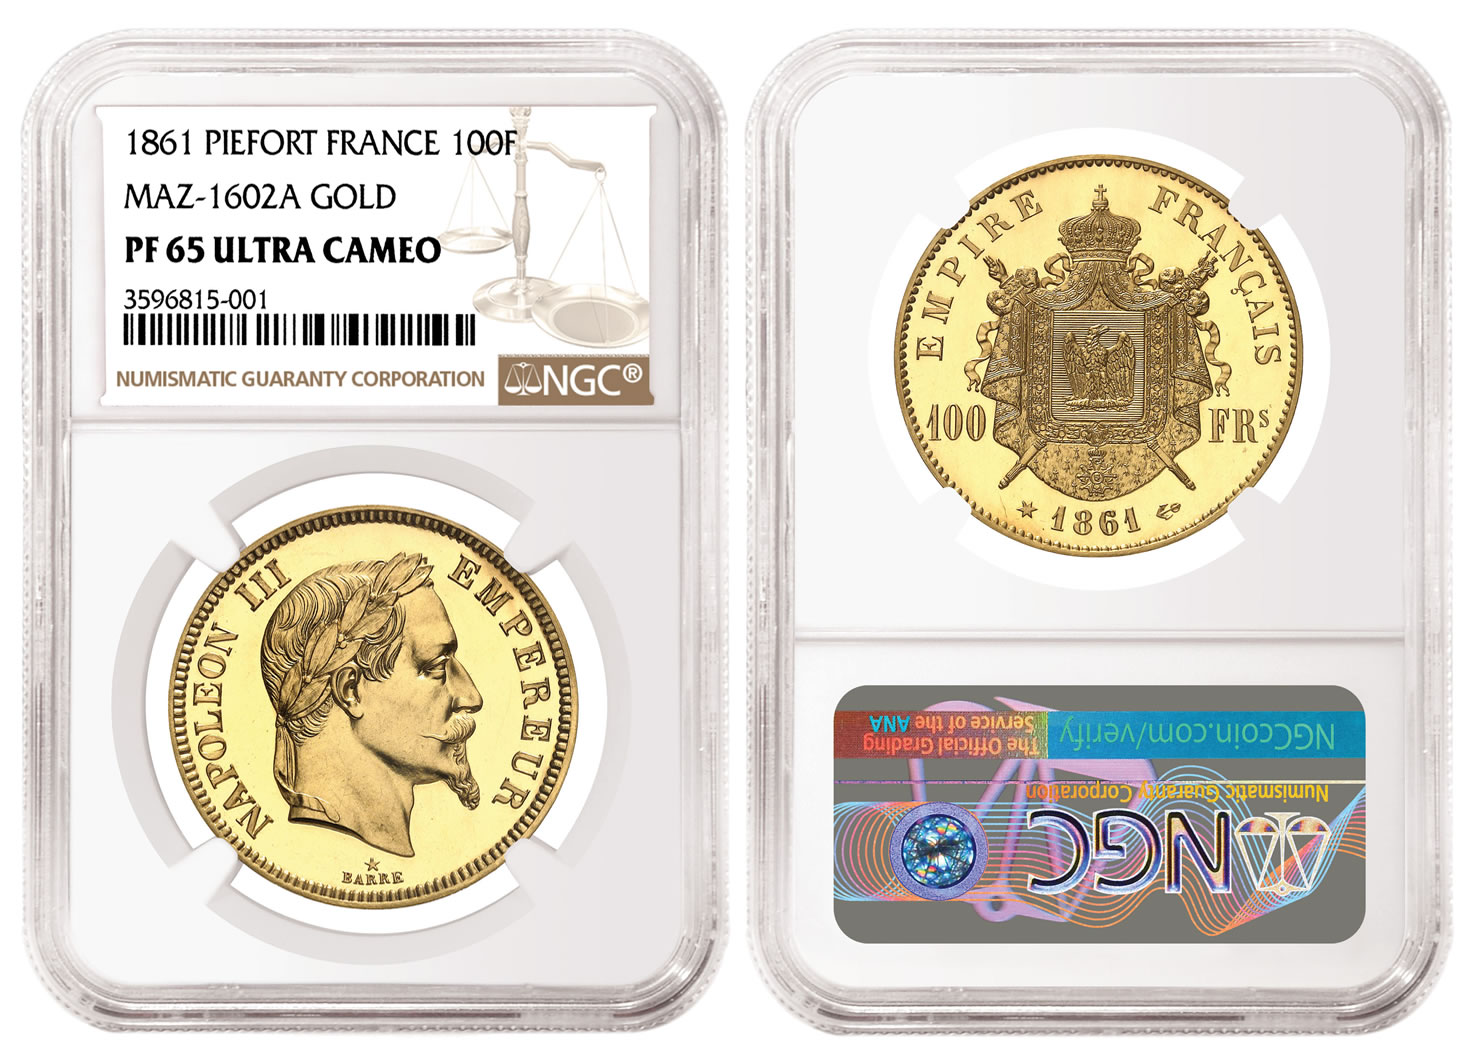 Two NGC-certified European Coins Top $700K Each in MDC Monaco Sale 